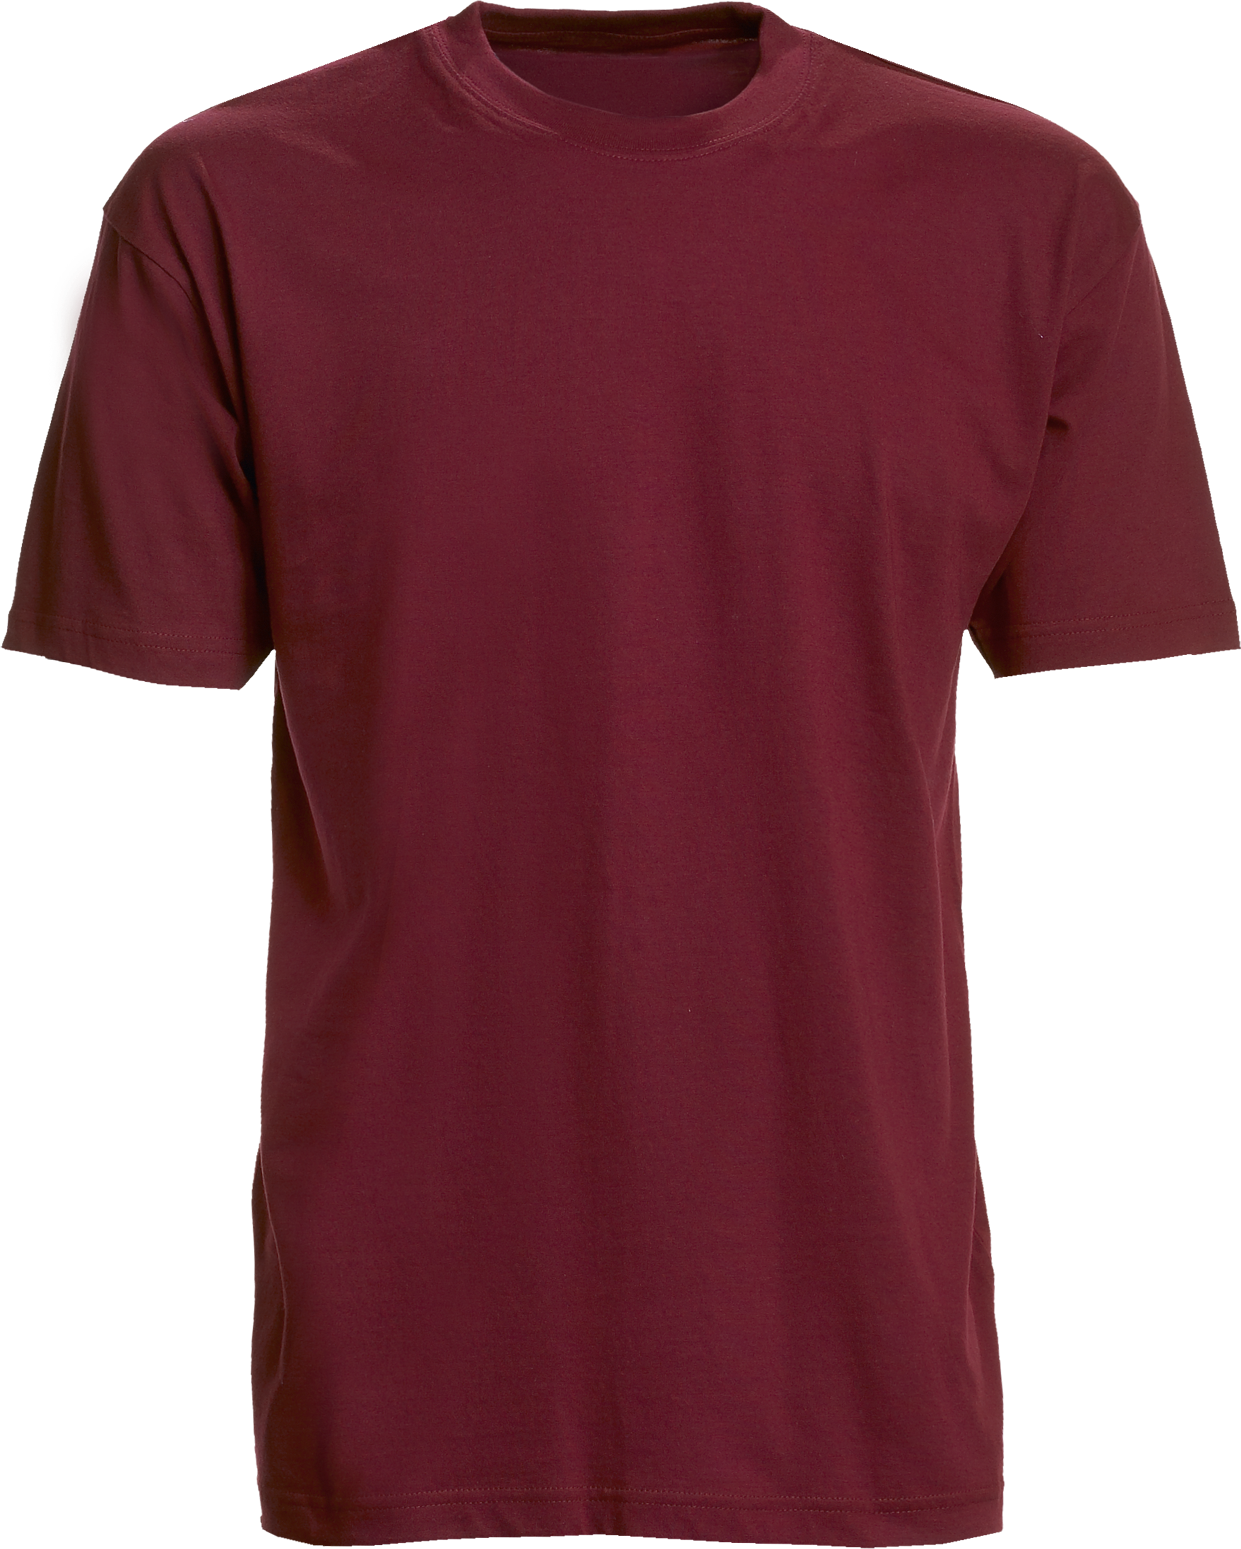 Bordeaux Unisex T-shirt, Basic (8150101)